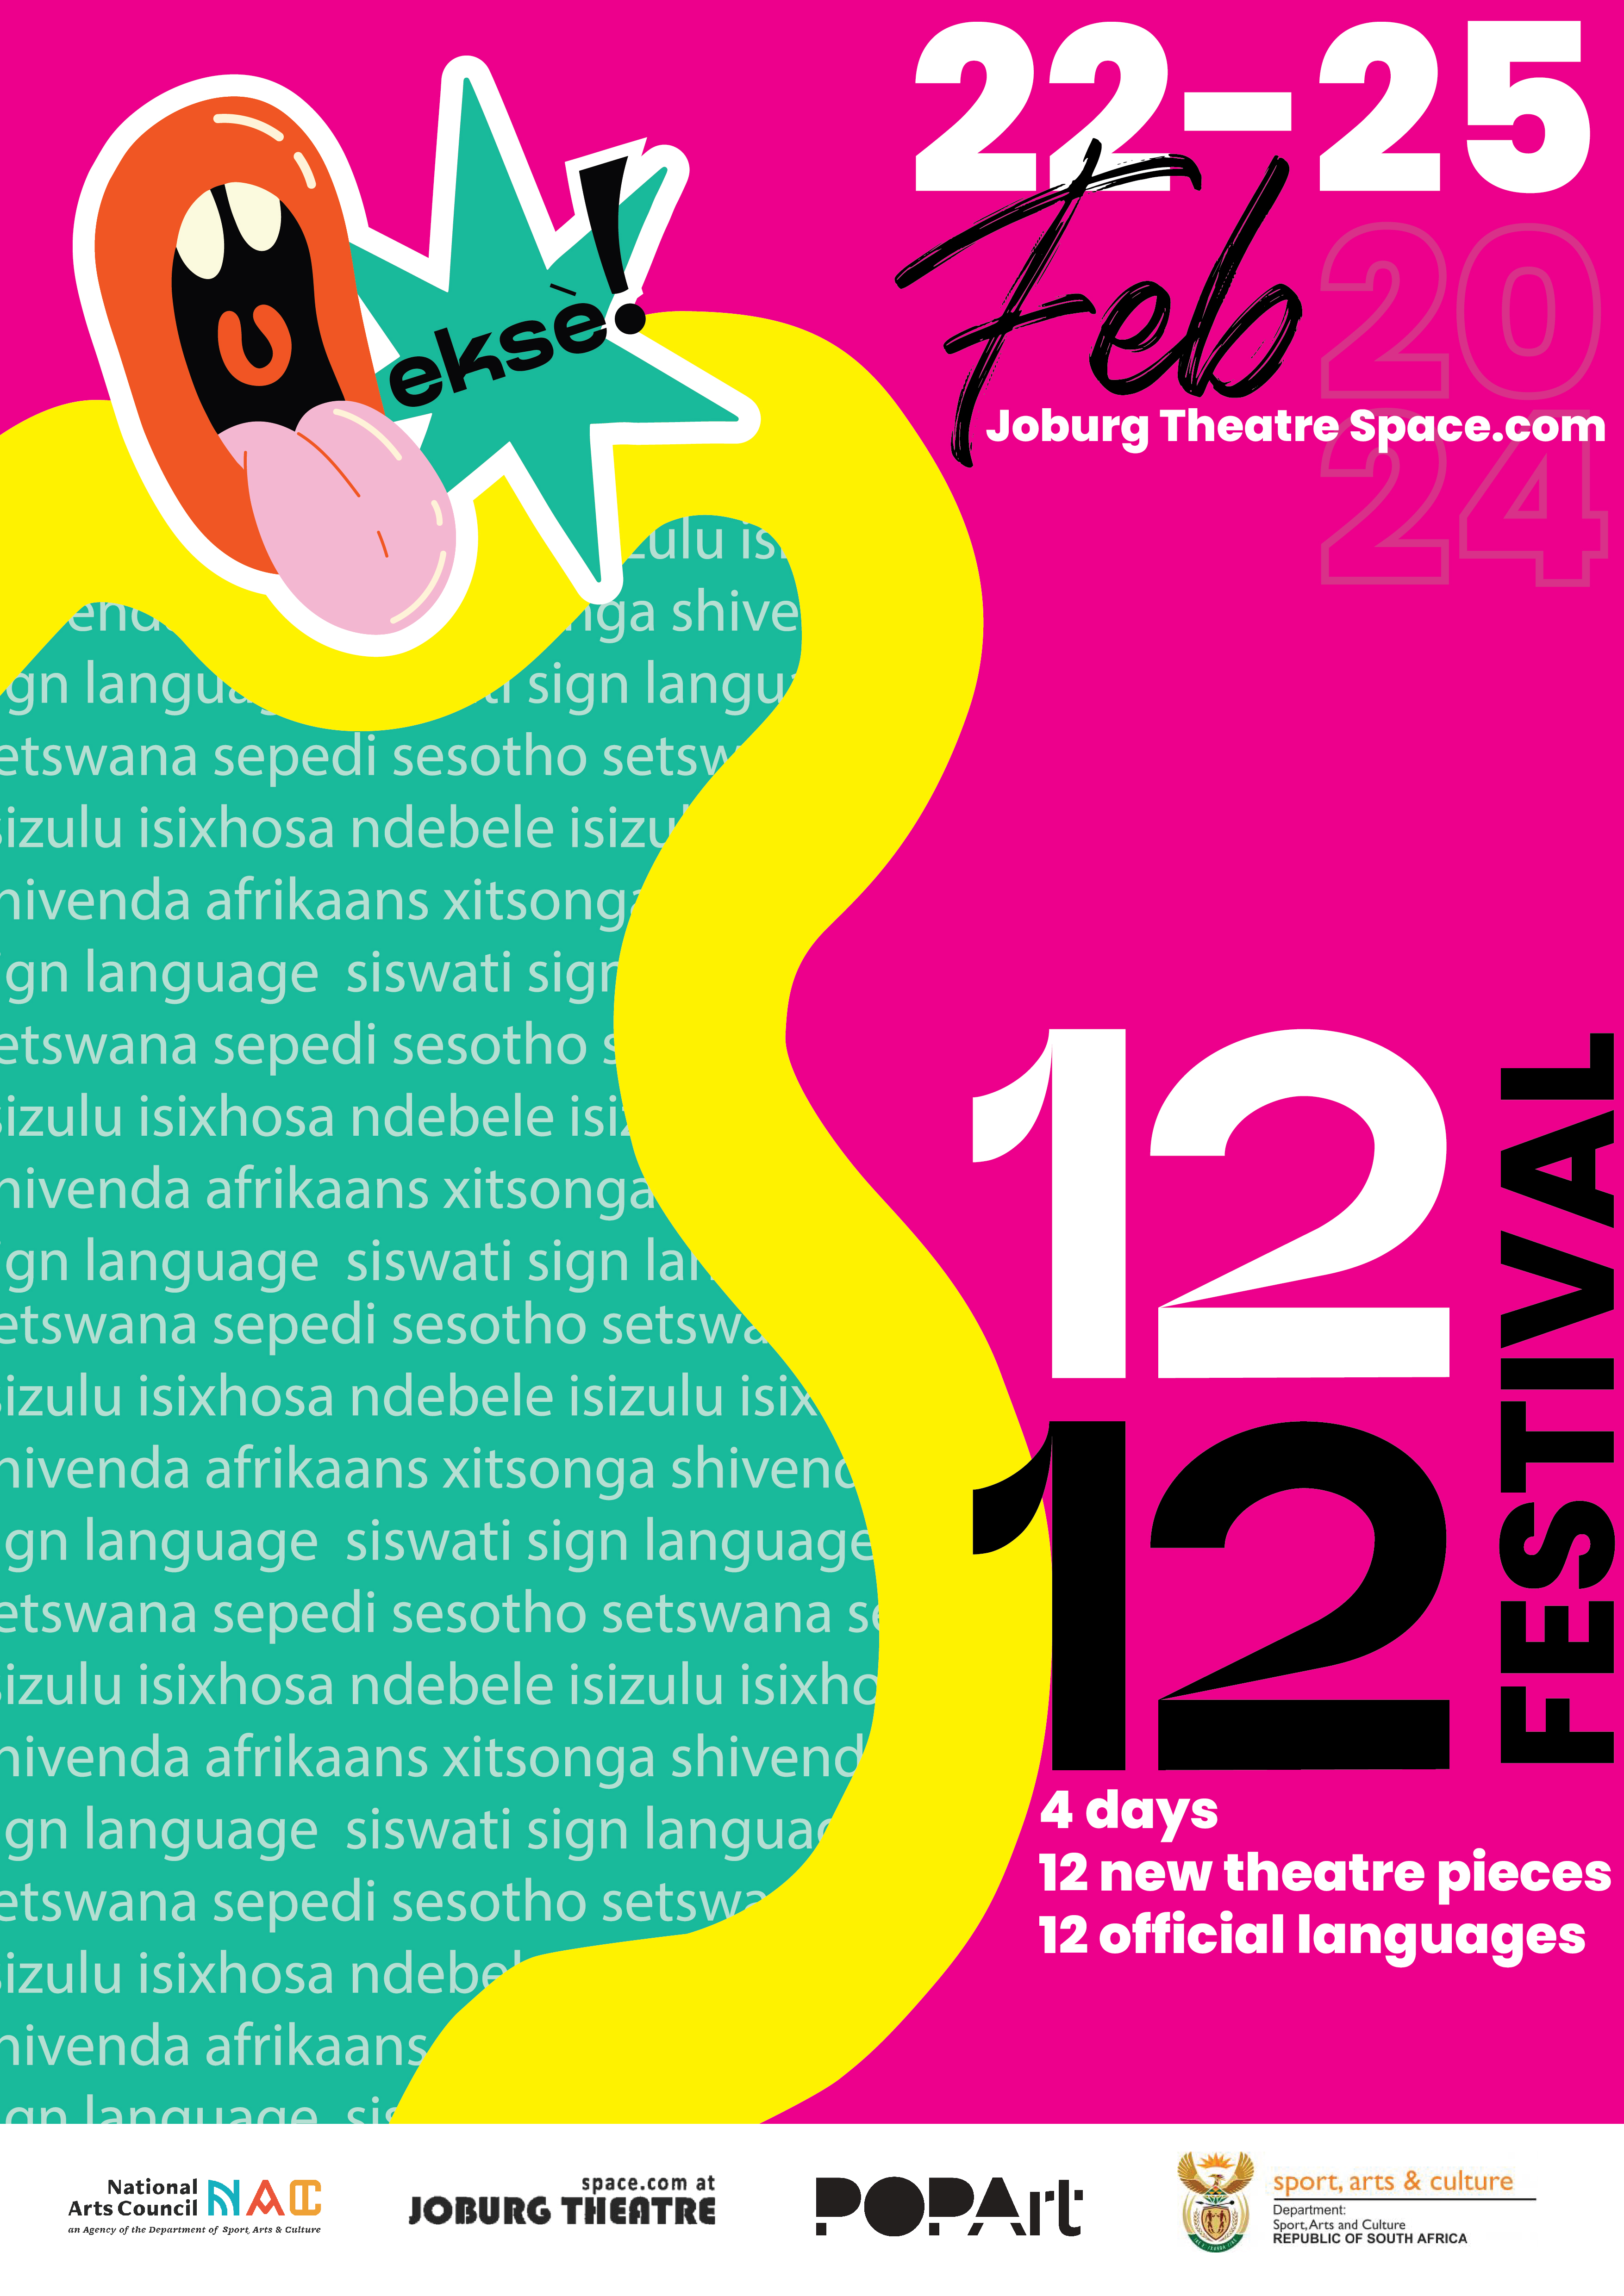 12/12 Festival at the Joburg Theatre Space.com